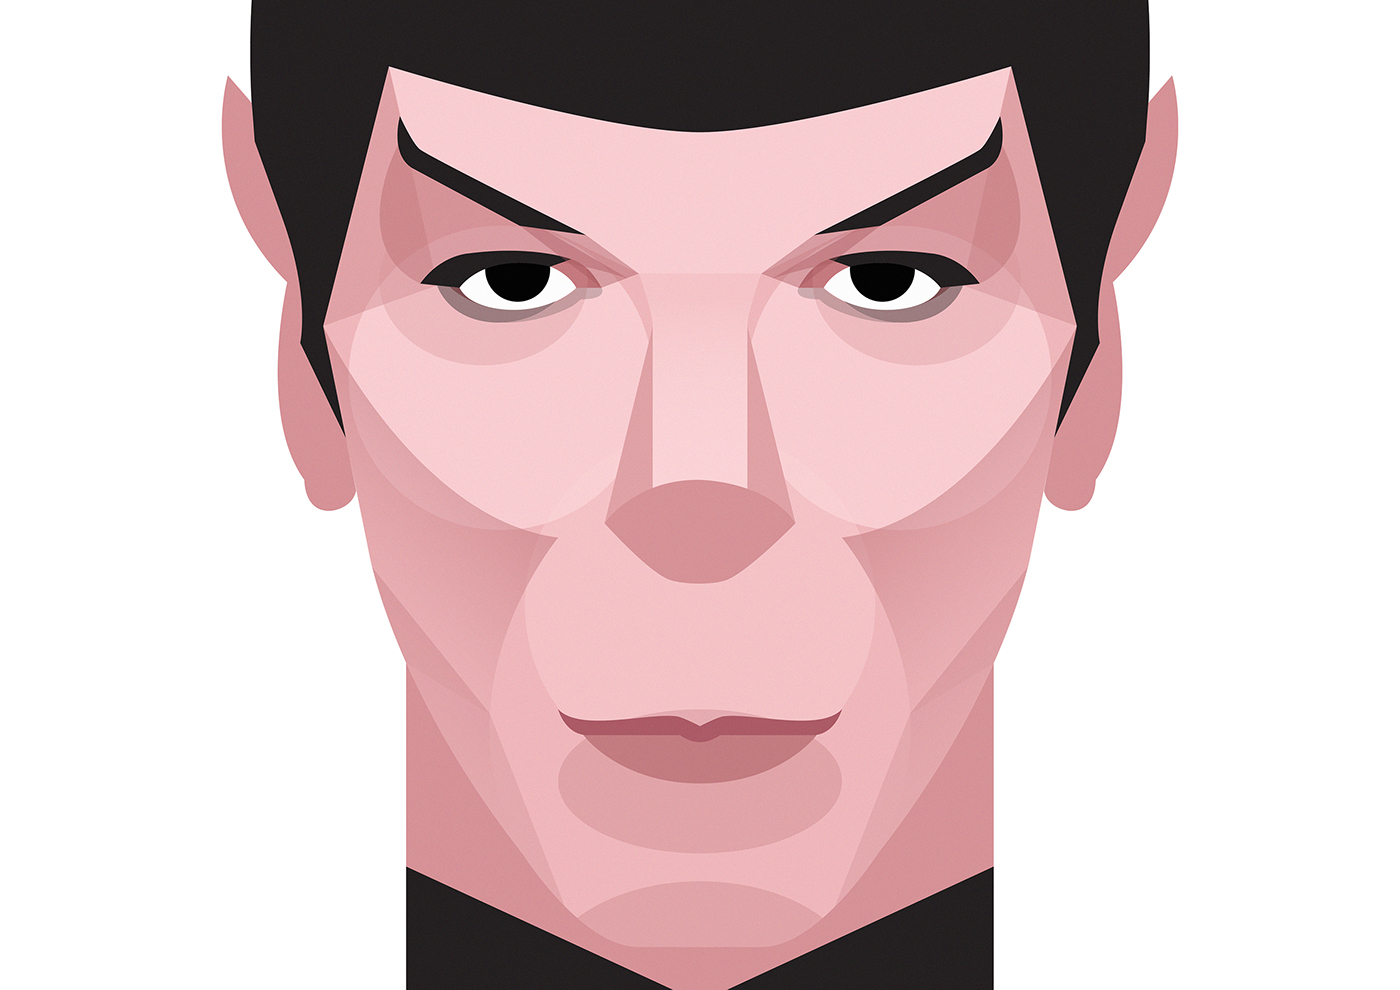 Star Trek spock leonard nimoy portrait Drawing  vector art Illustrator bigbratwolf